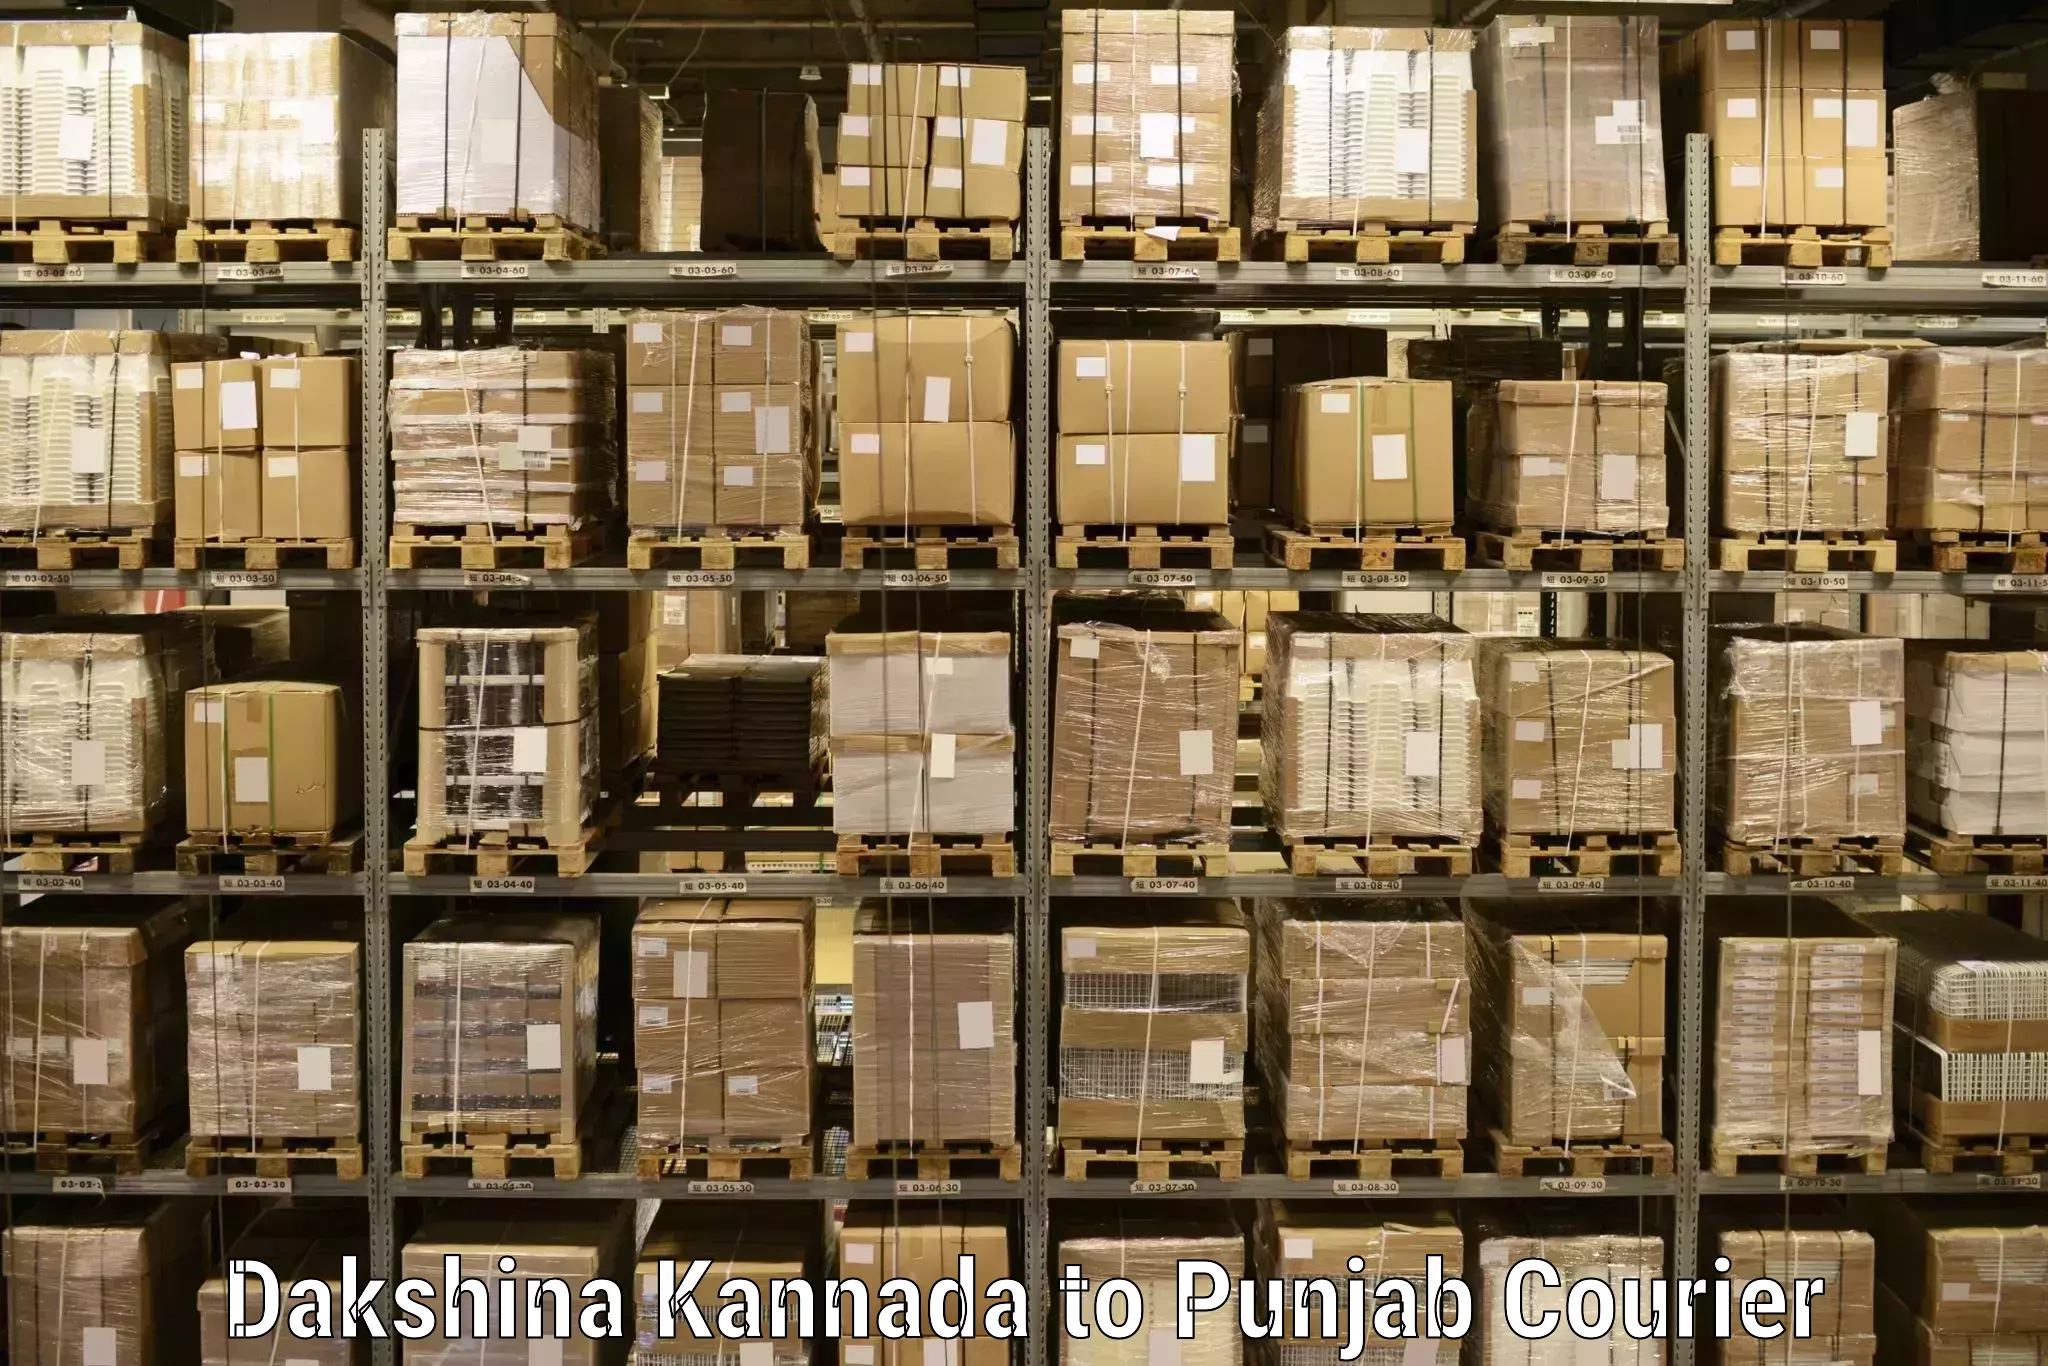 Professional courier handling Dakshina Kannada to Malerkotla